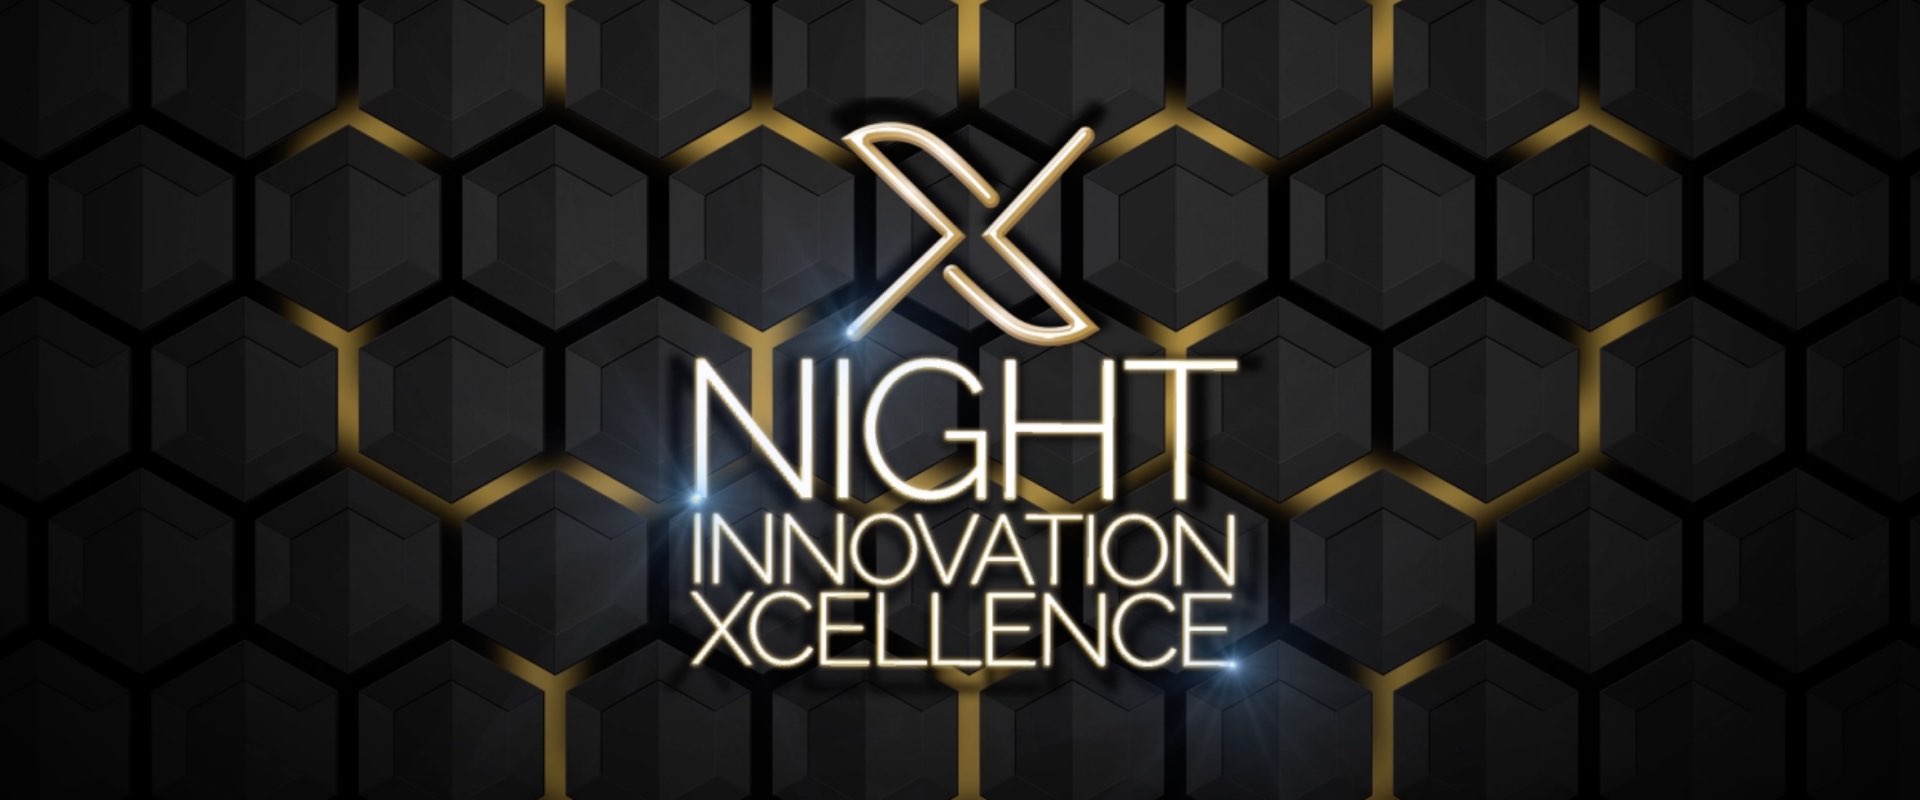 X-Night Innovation Xcellence